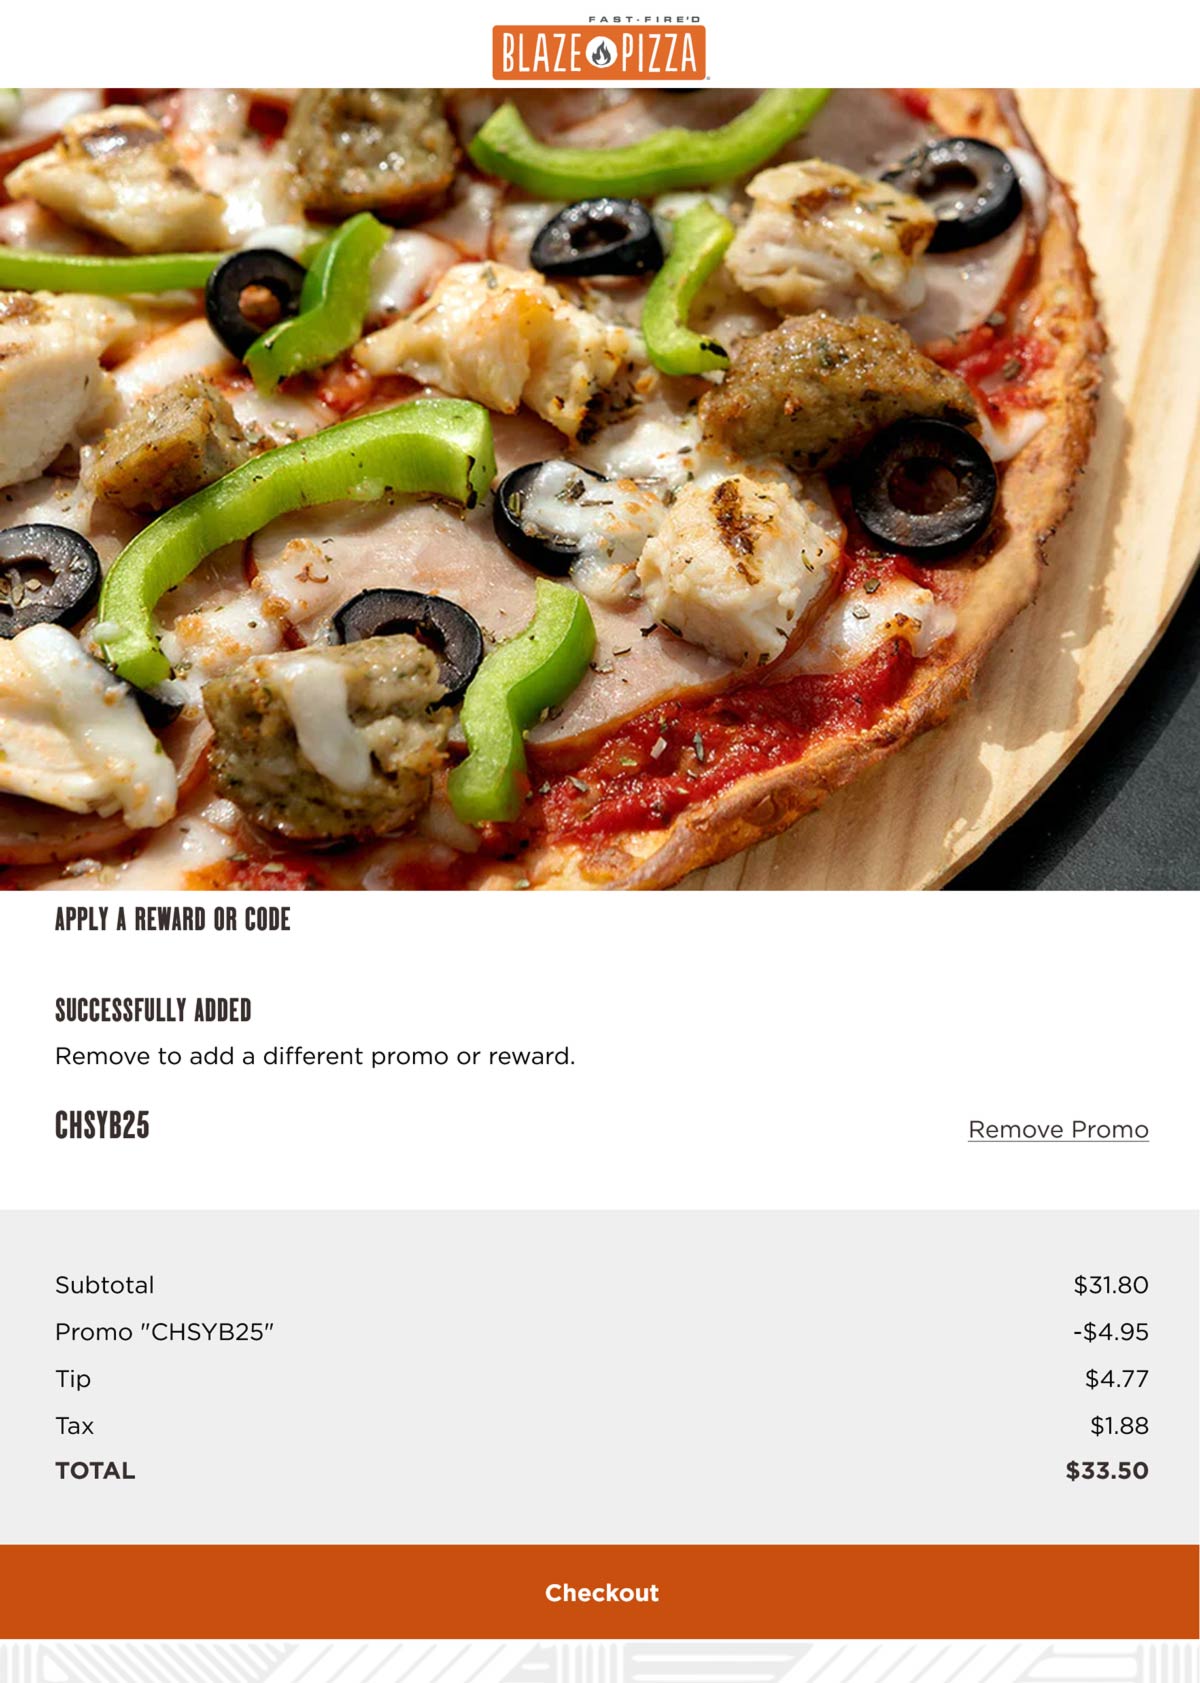 Blaze Pizza restaurants Coupon  Free cheese garlic bread with $25 spent at Blaze Pizza via promo code CHSYB25 #blazepizza 